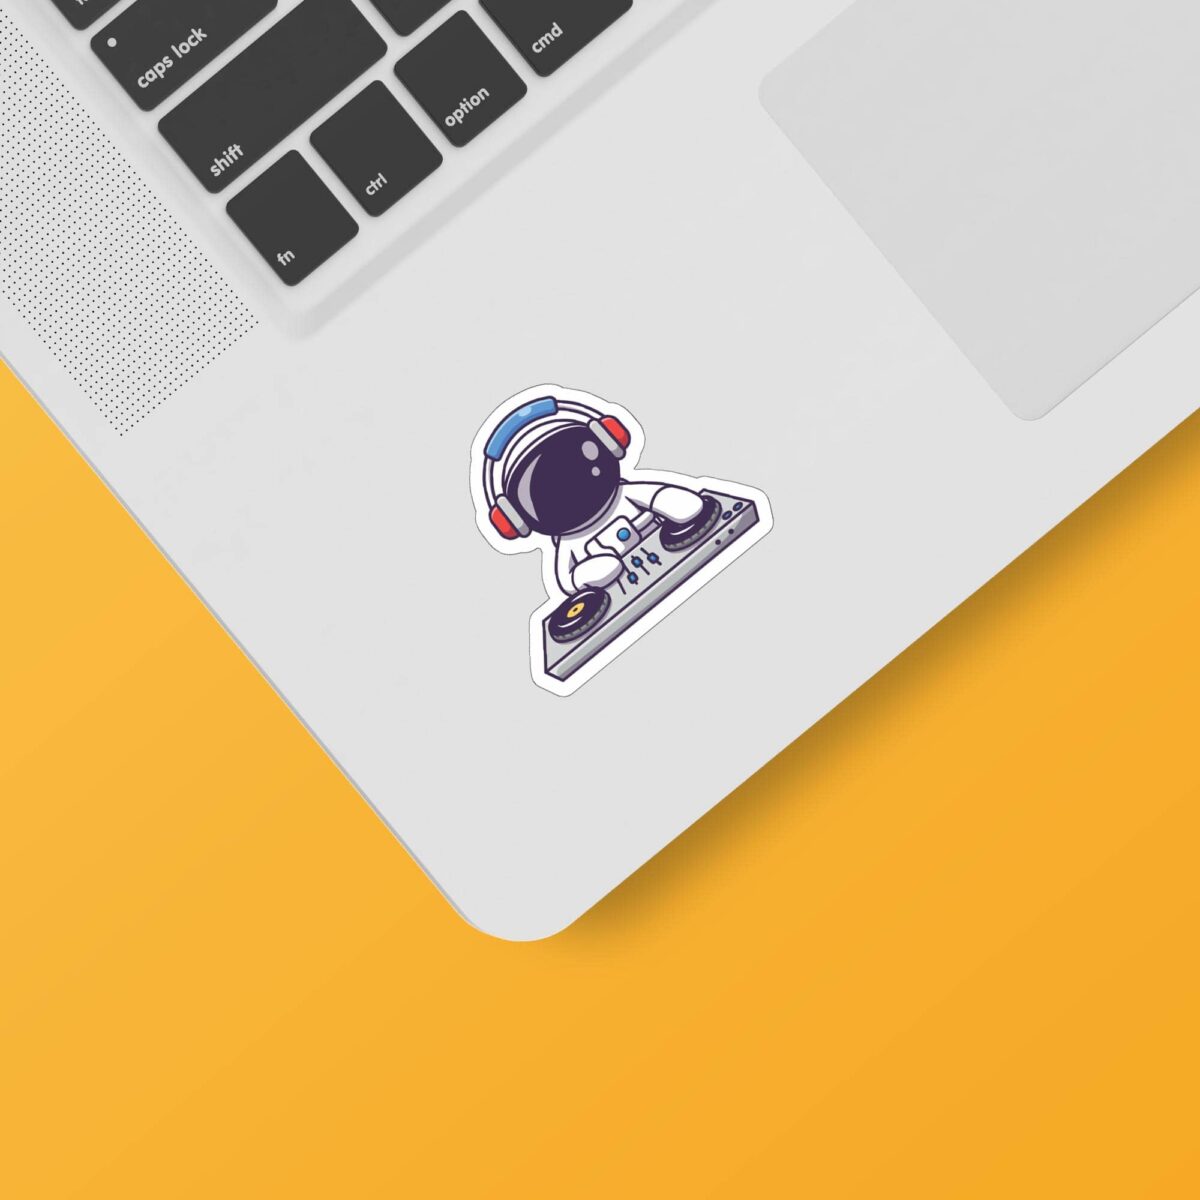 Astronaut laptop design code 07 with keyboard sticker